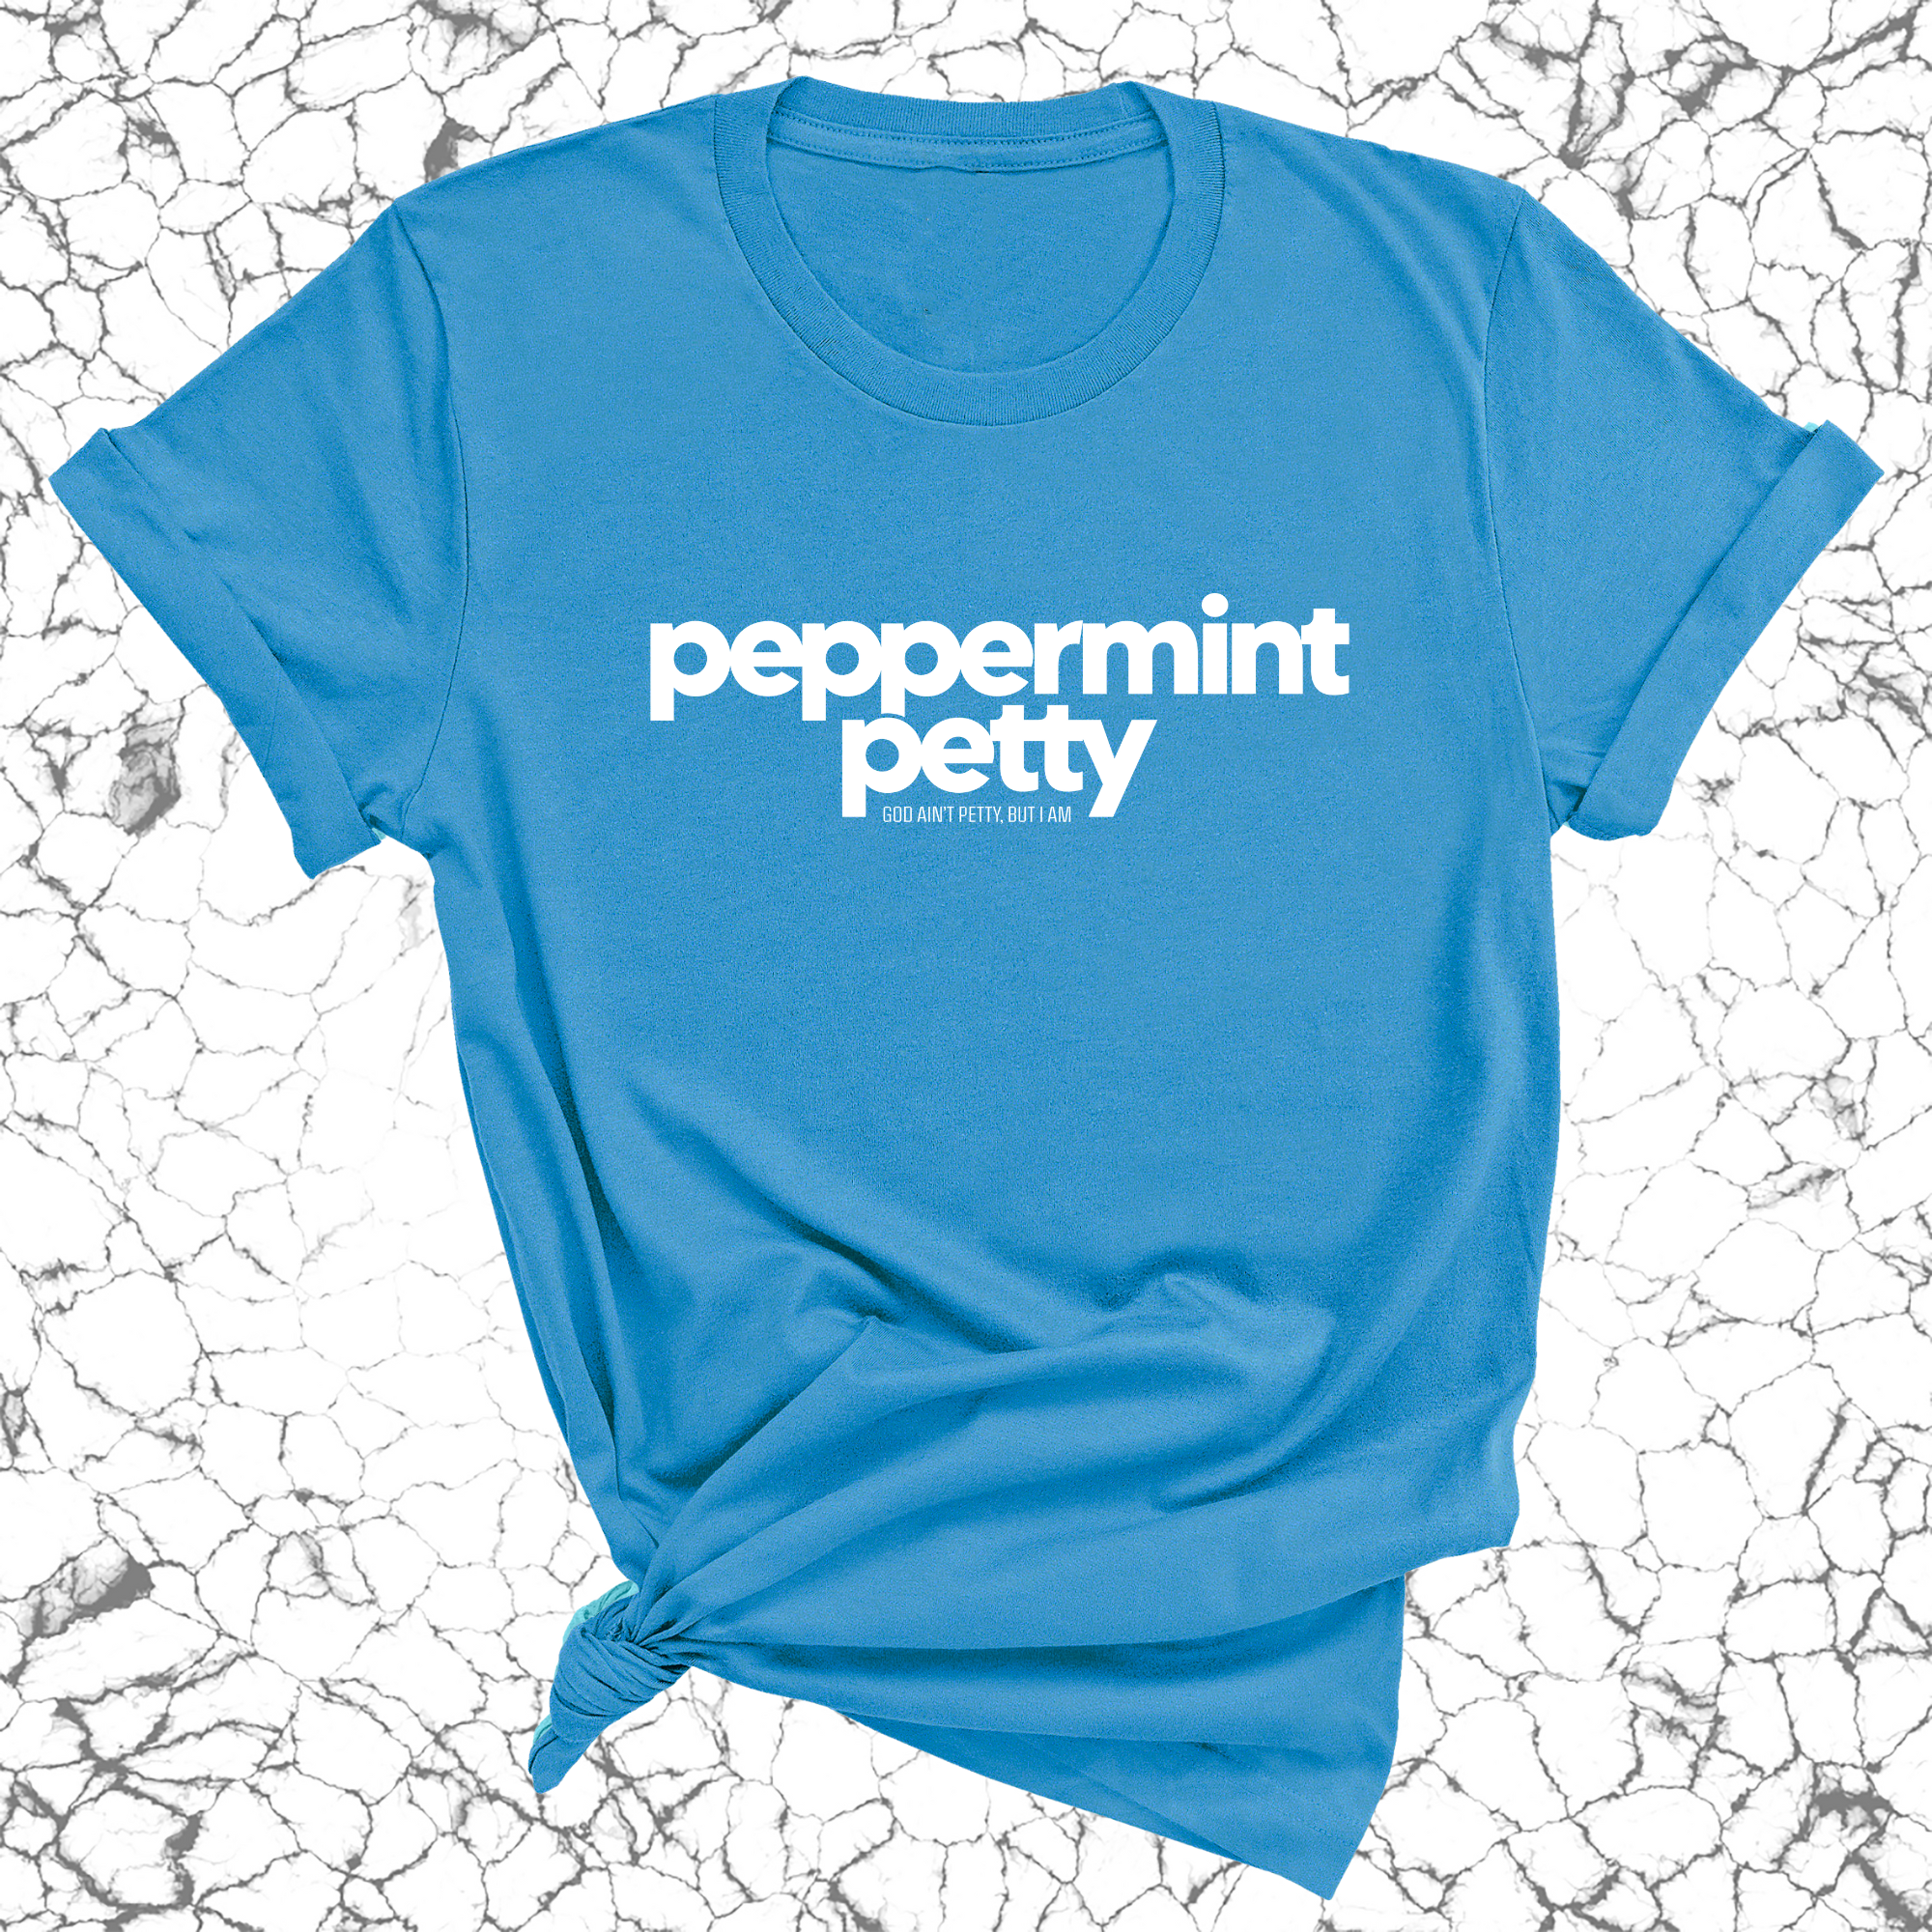 Peppermint Petty Unisex Tee-T-Shirt-The Original God Ain't Petty But I Am